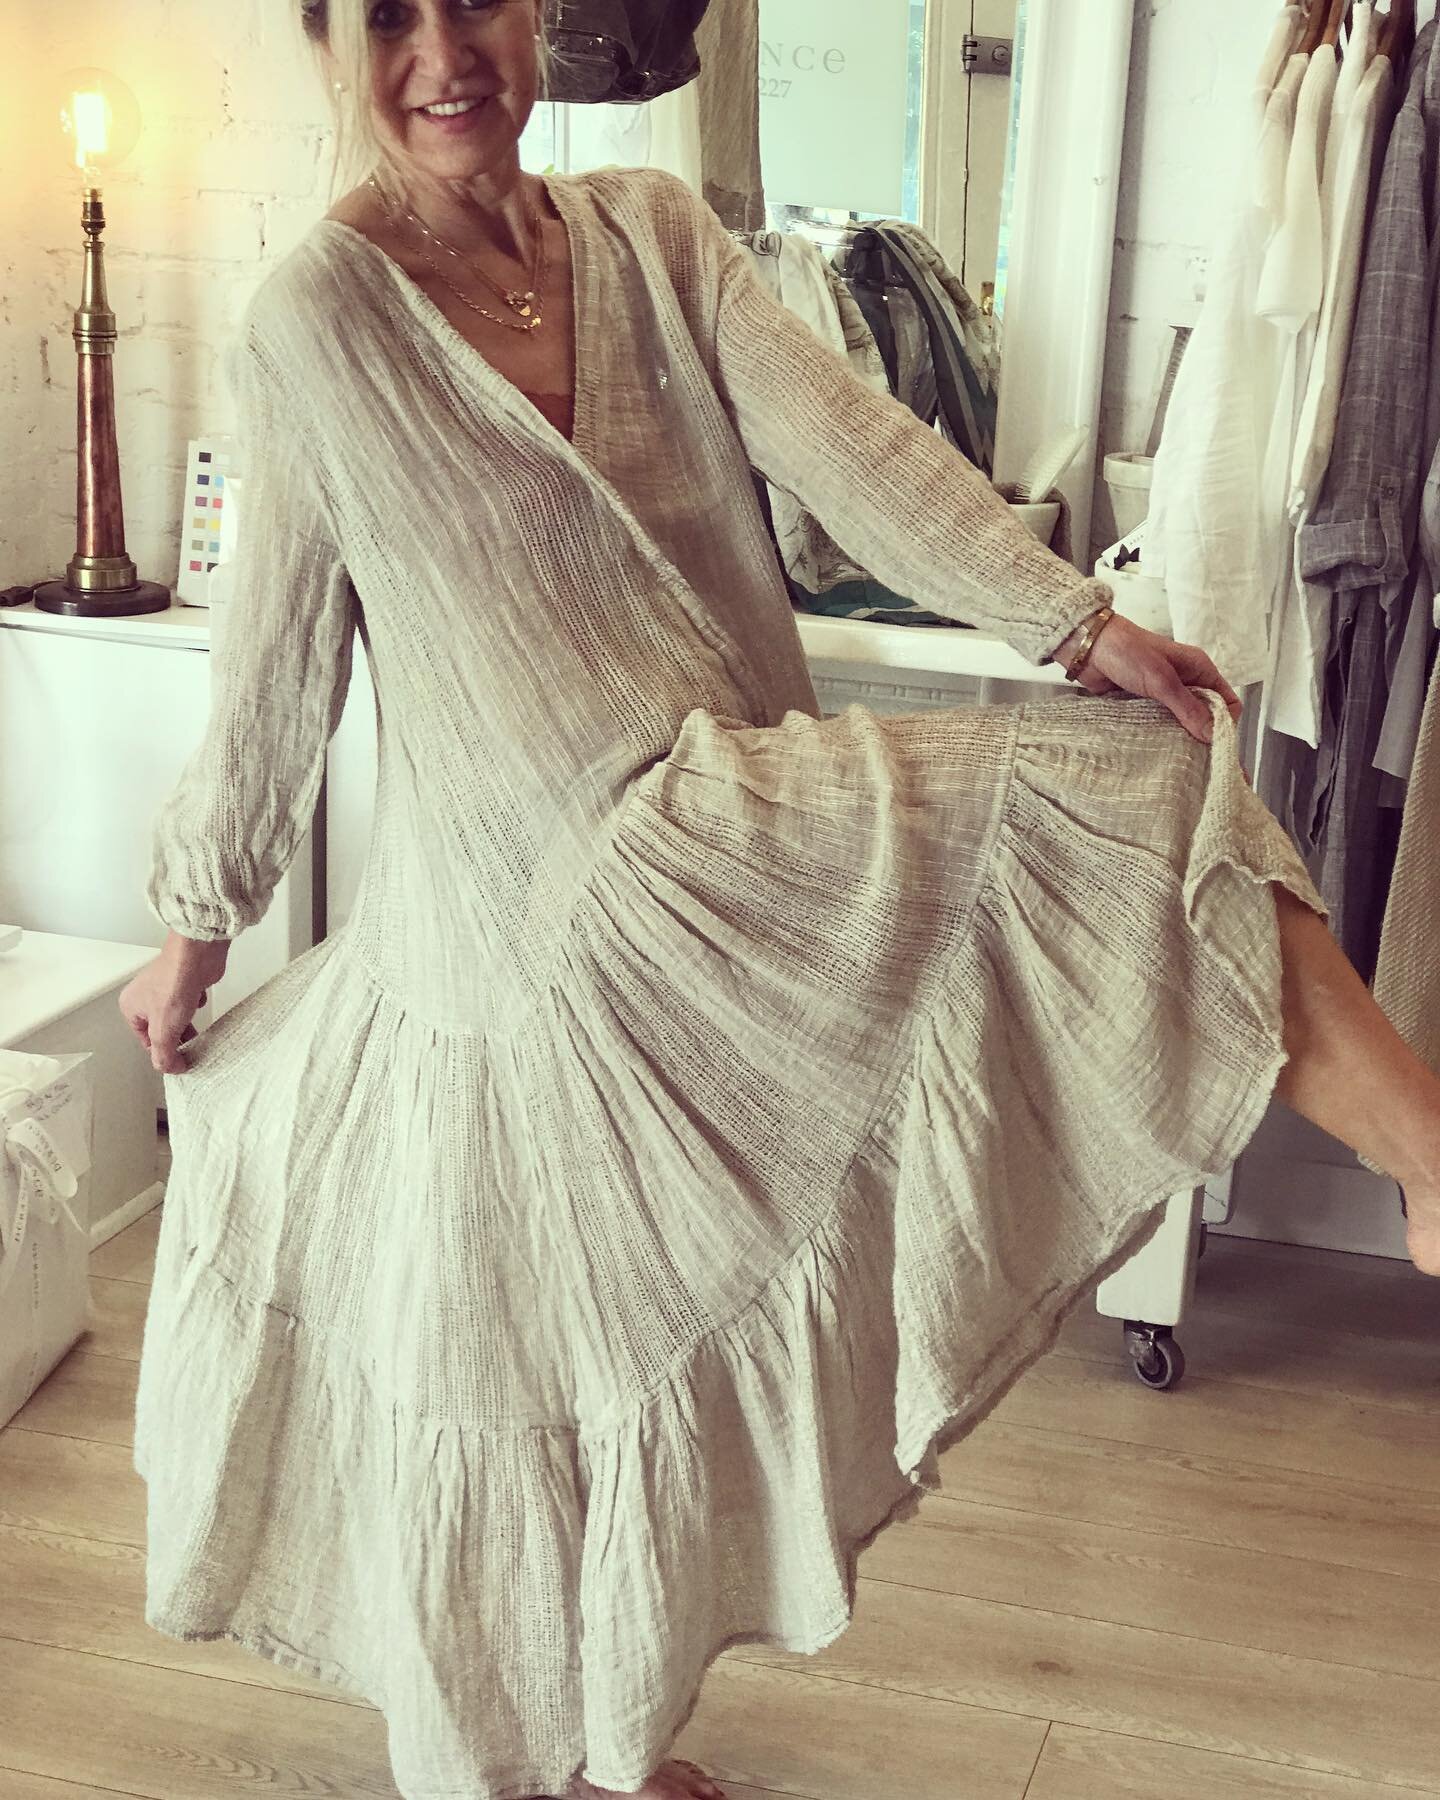 100% Linen, exclusively made in Positano for Estilo Emporio. Love Lucy in this dress  #estiloemporio #luxurylinen #chic #style #luxurylifestyle #europeanstyle #italianfabrics